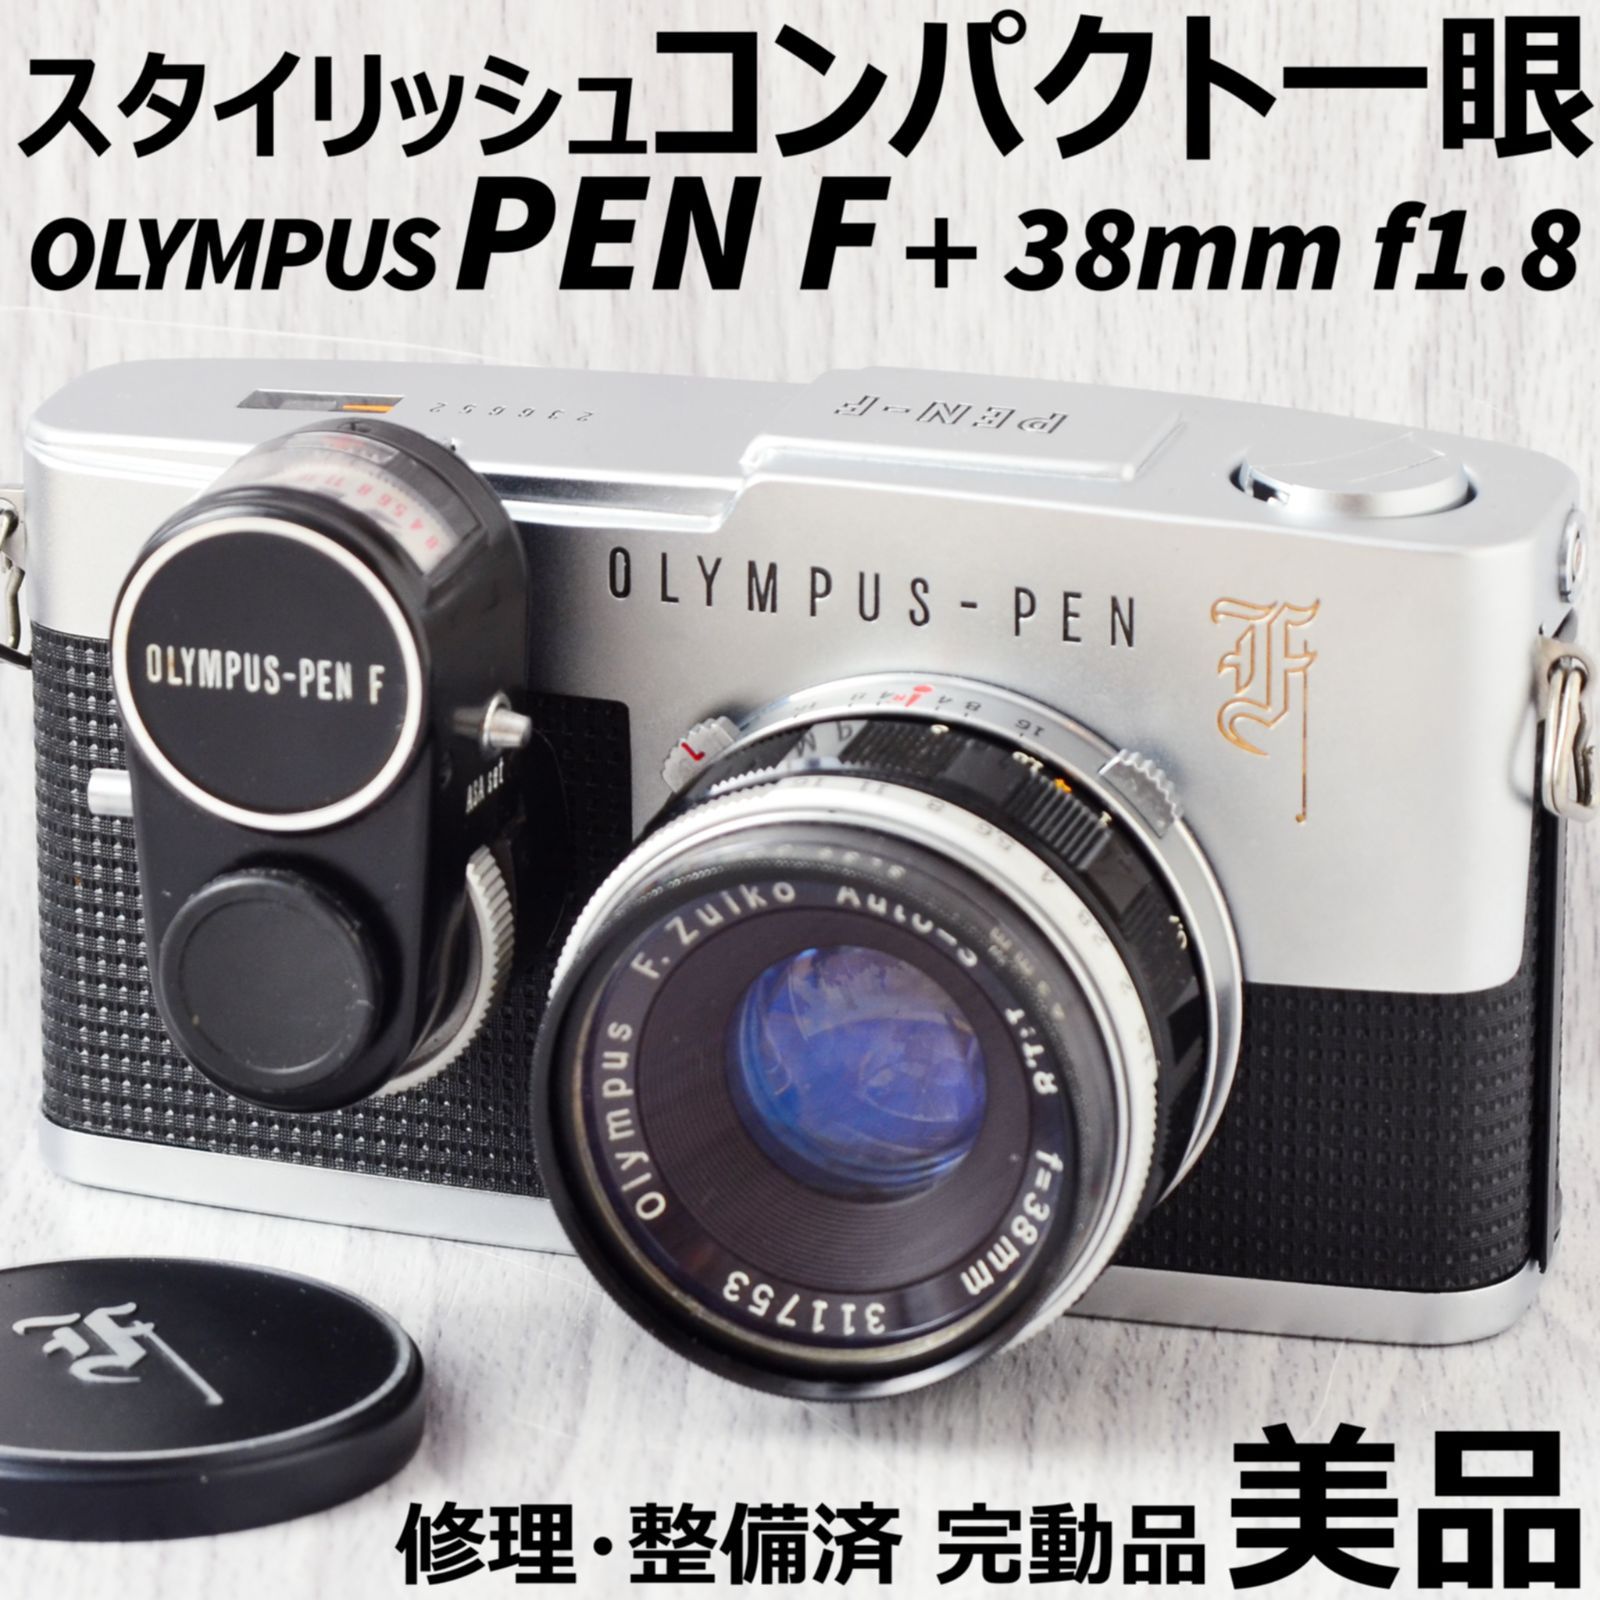 美品 OLYMPUS PEN F + 38mm f1.8 露出計付 修理・整備済 完動品 - メルカリ